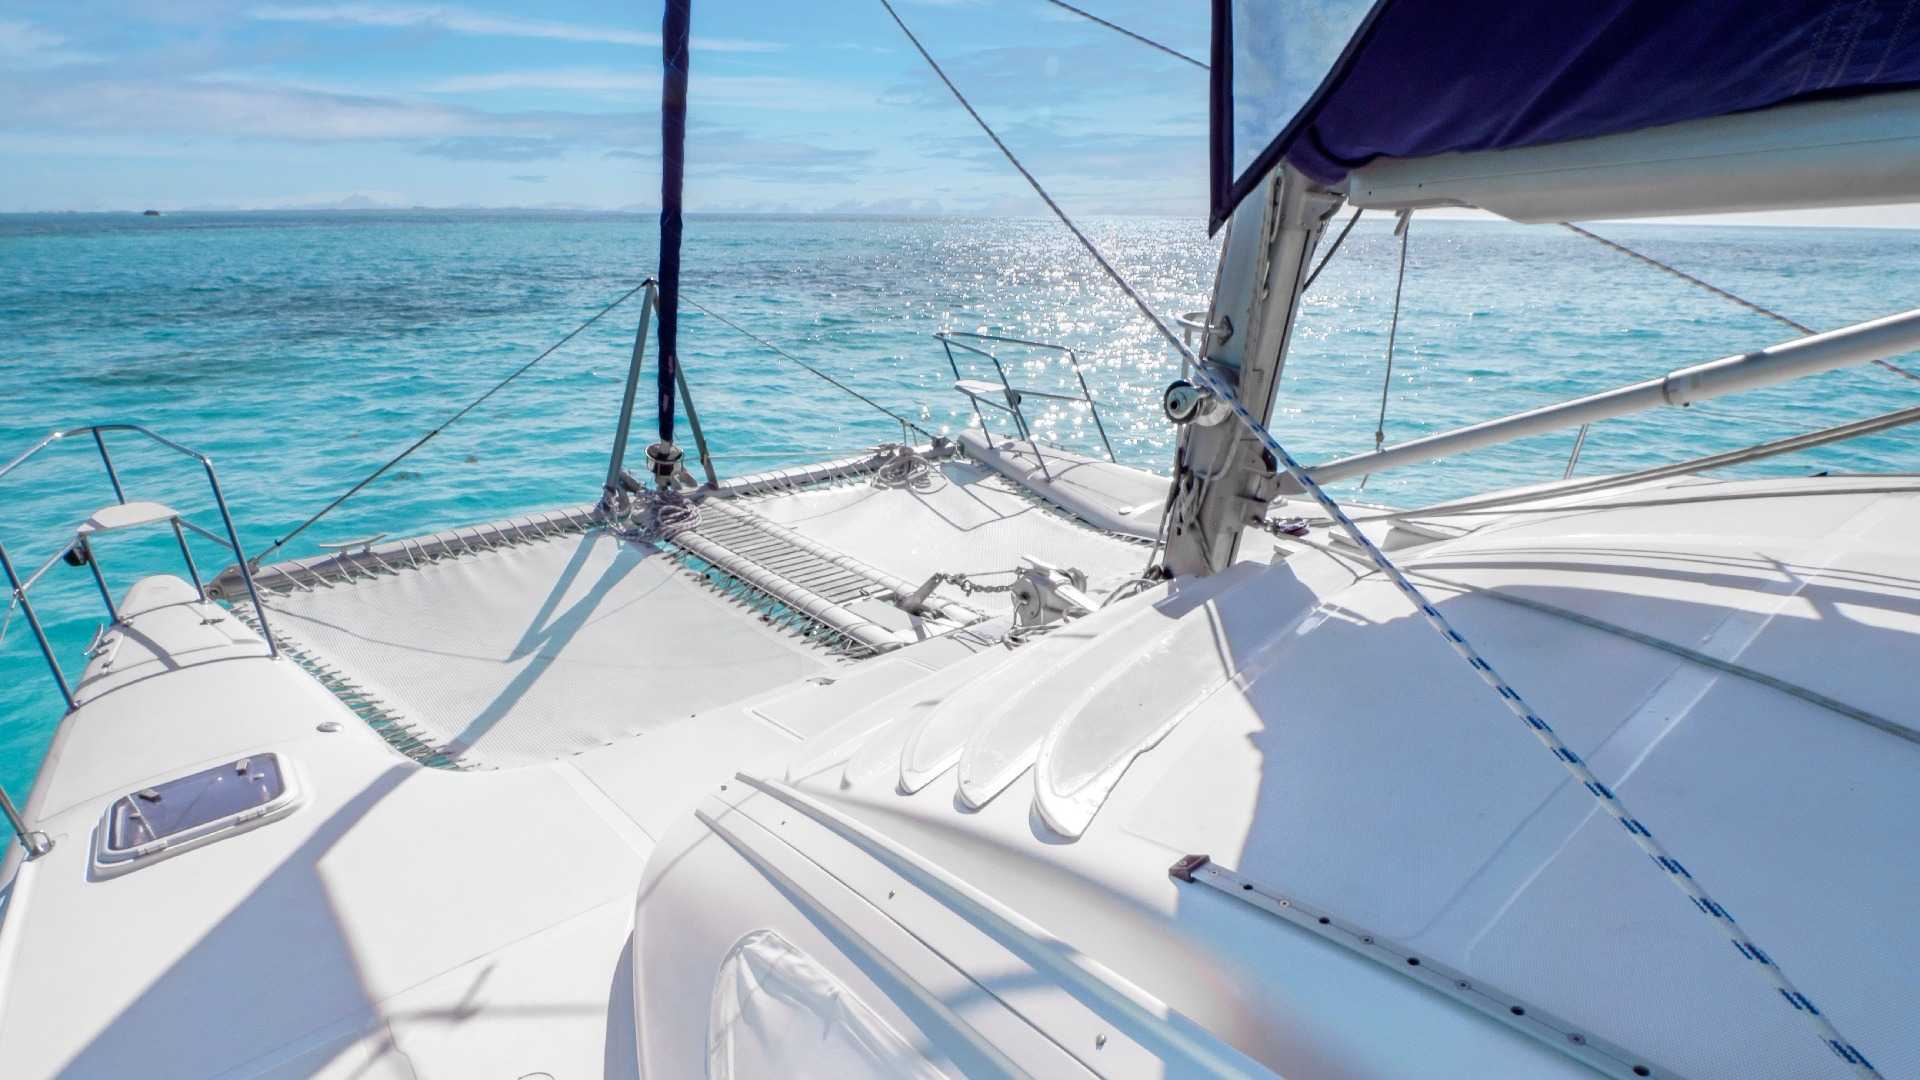 06 - LoRES - Khaya catamaran - Cancun Sailing-1